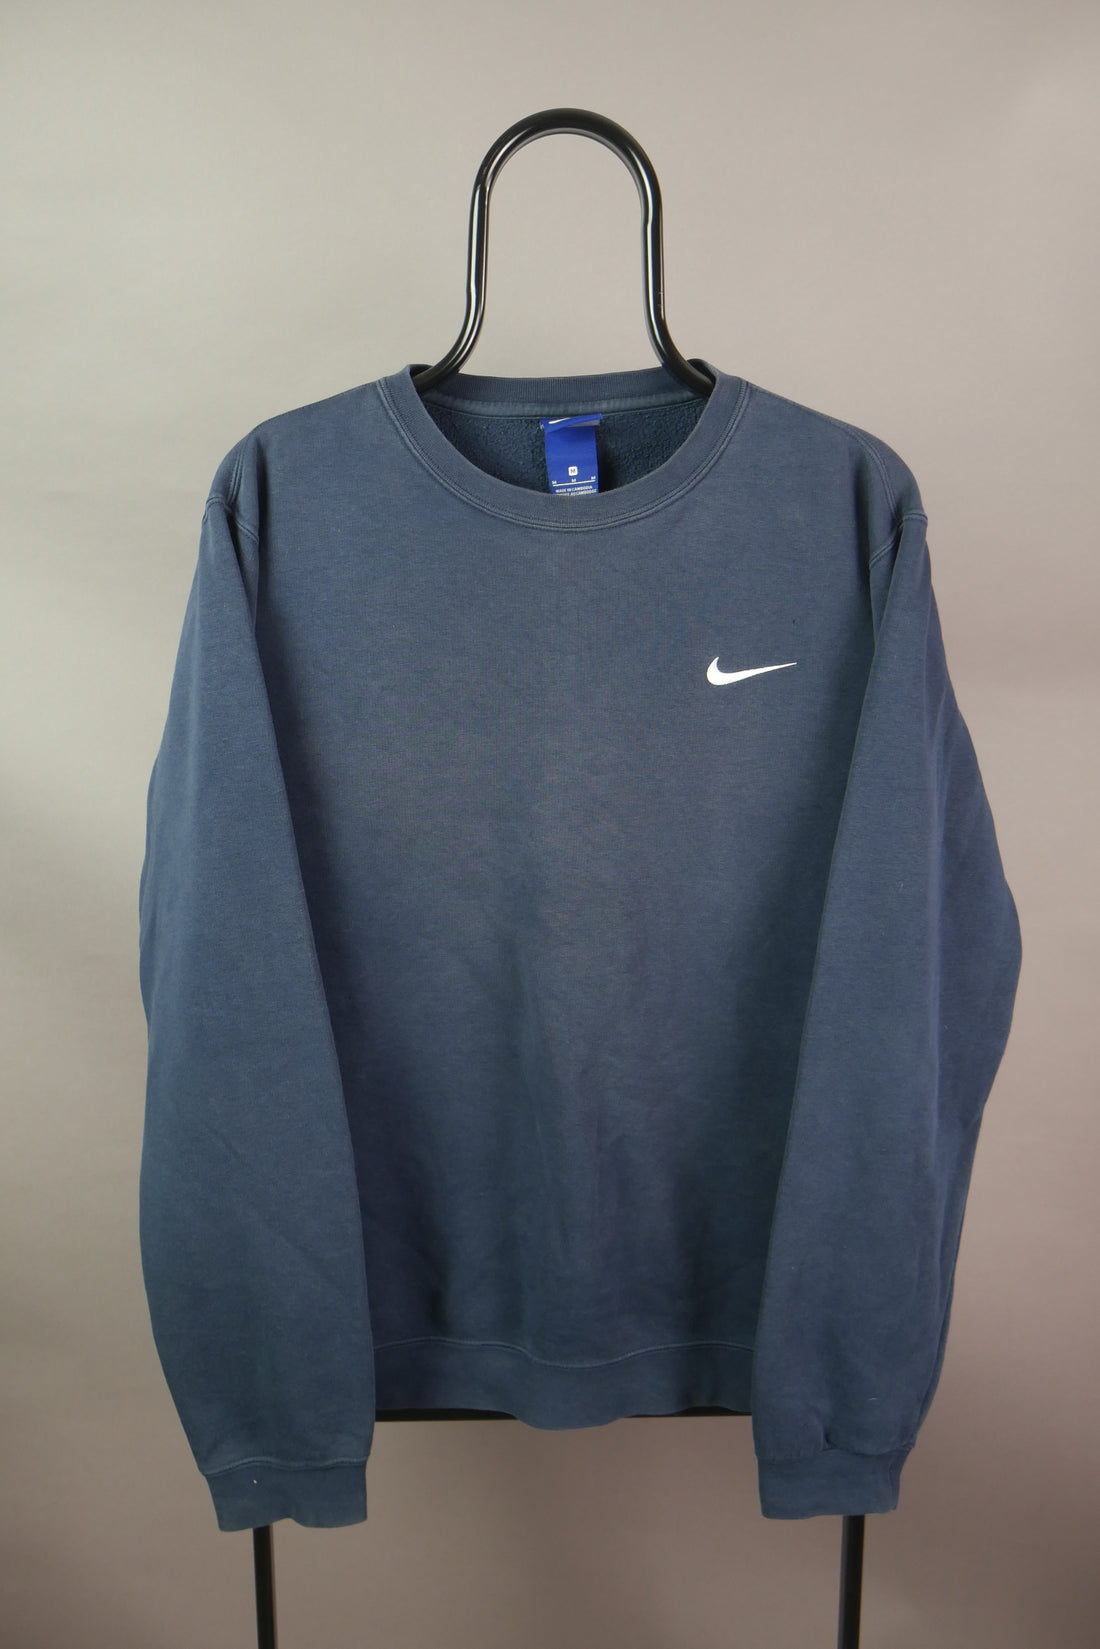 The Nike Embroidered Tick Sweatshirt (M)